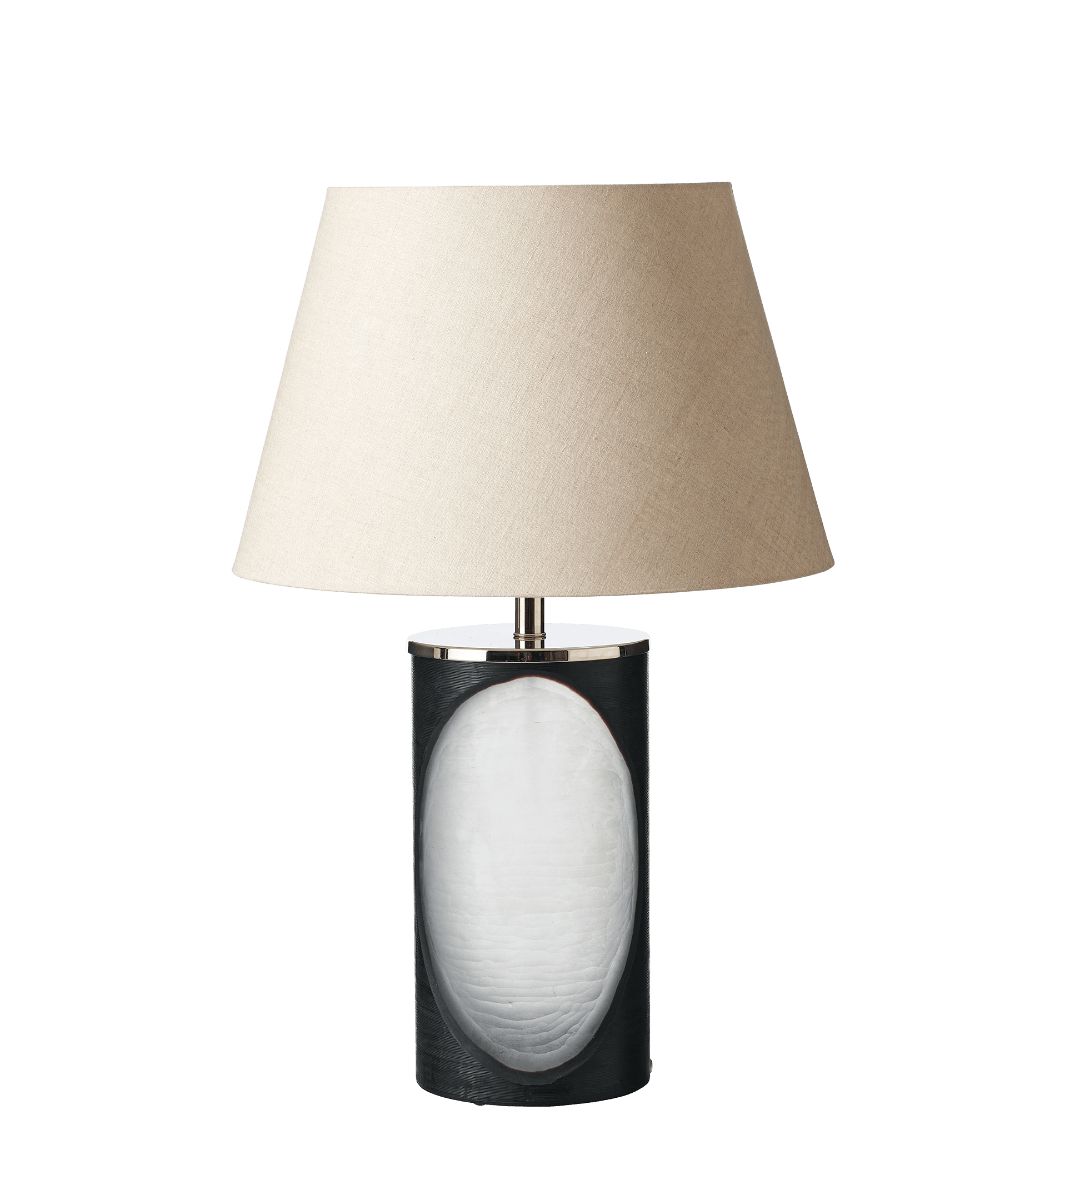 Celestial Table Lamp - Black/White | OKA US